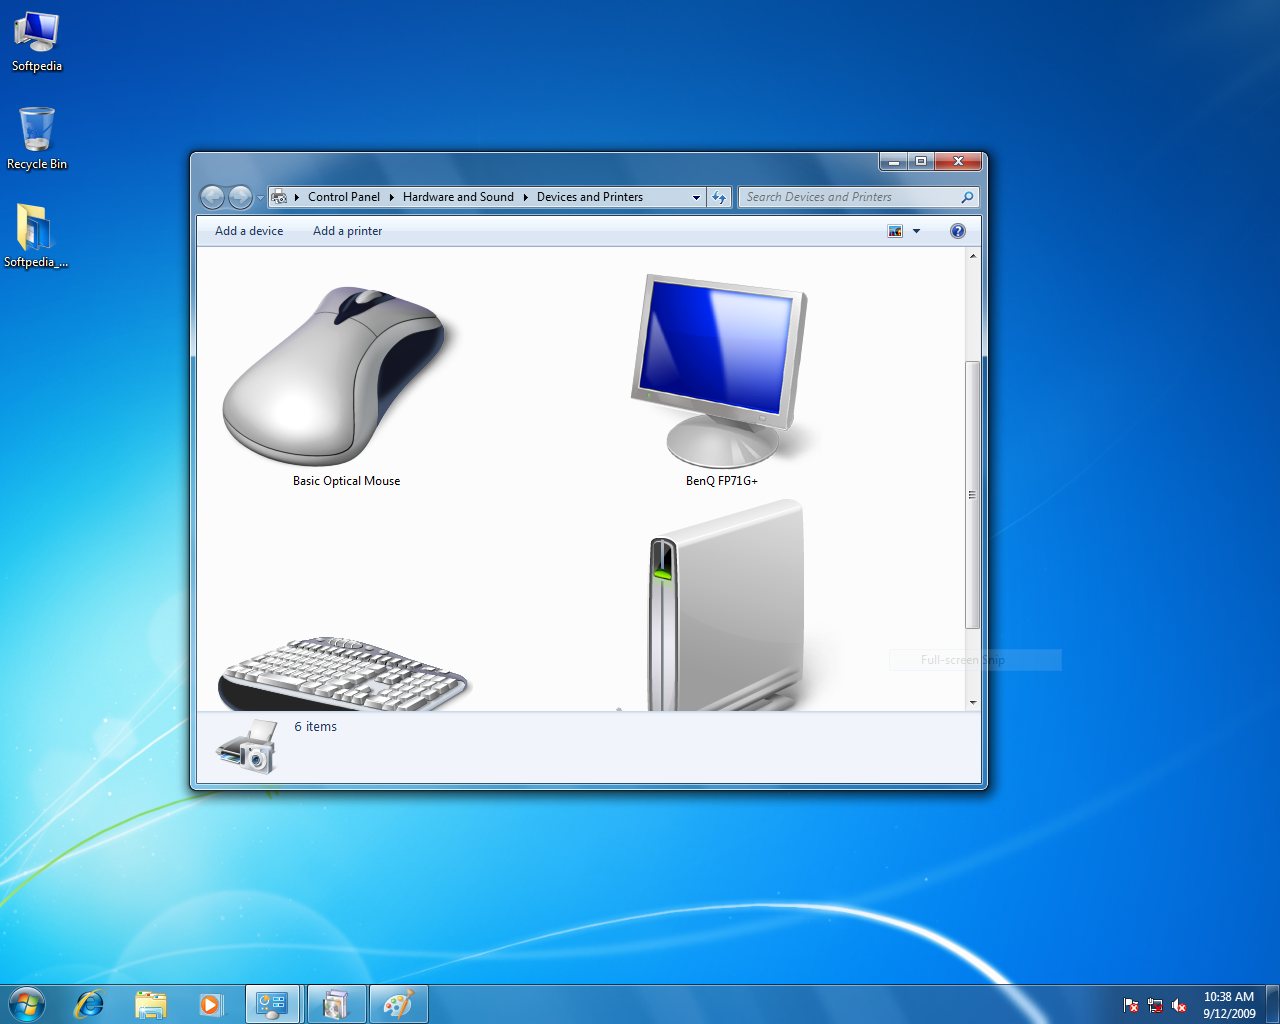 Bitlocker Software For Windows 7 Home Basic Free